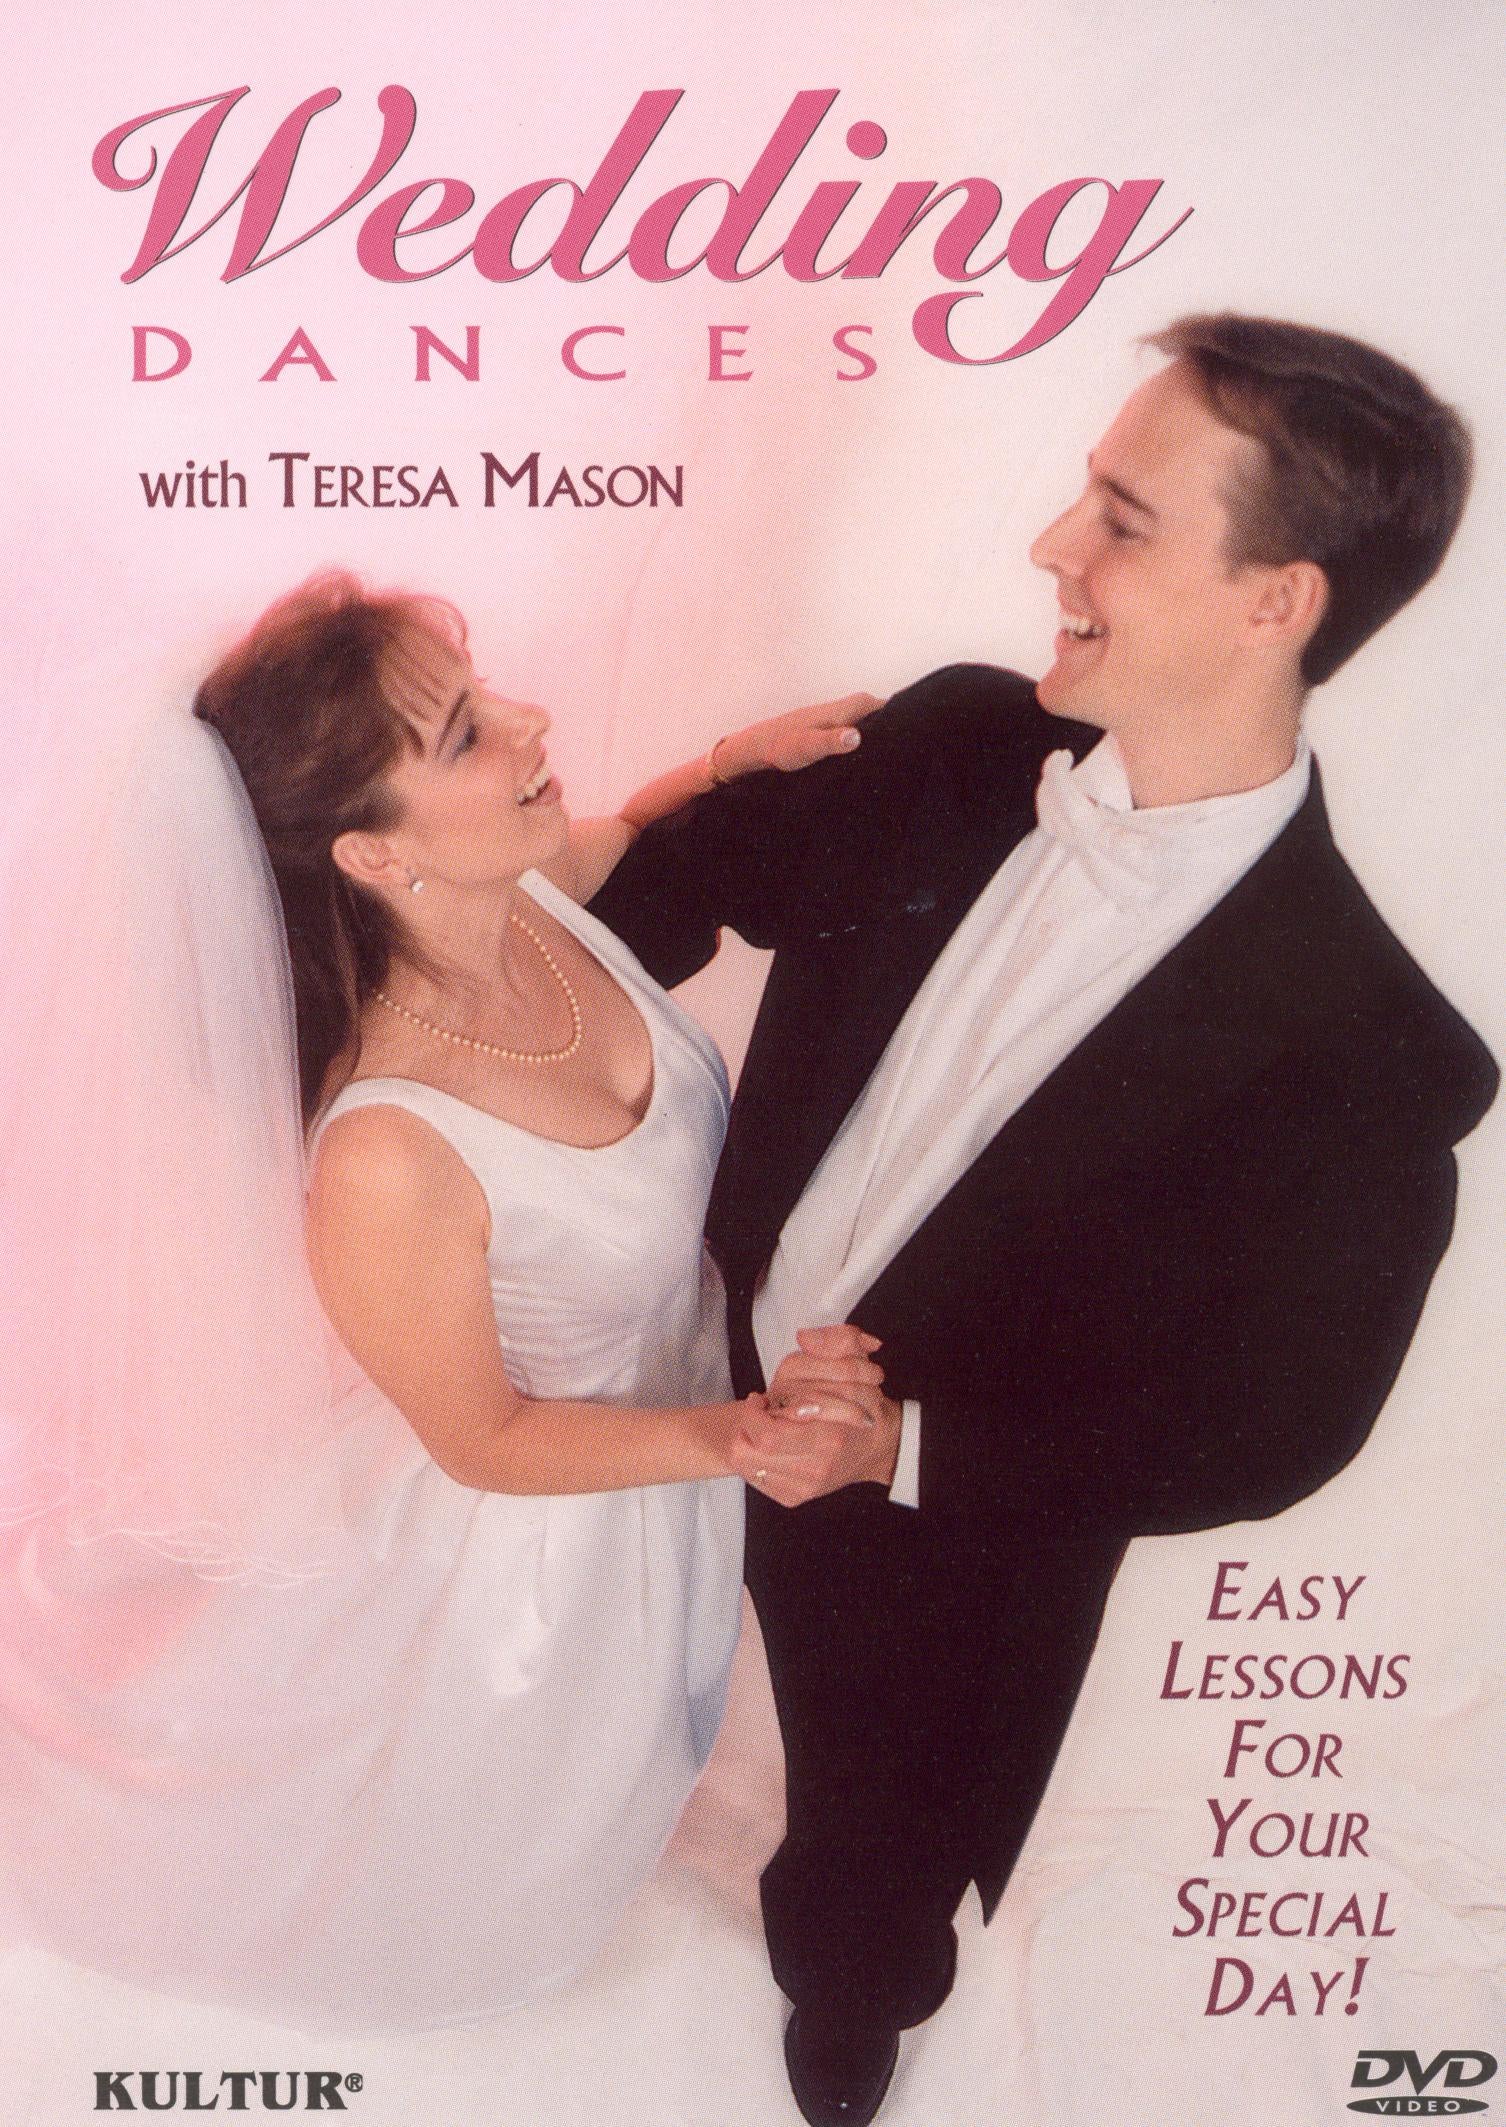 Wedding Dances With Teresa Mason cover art